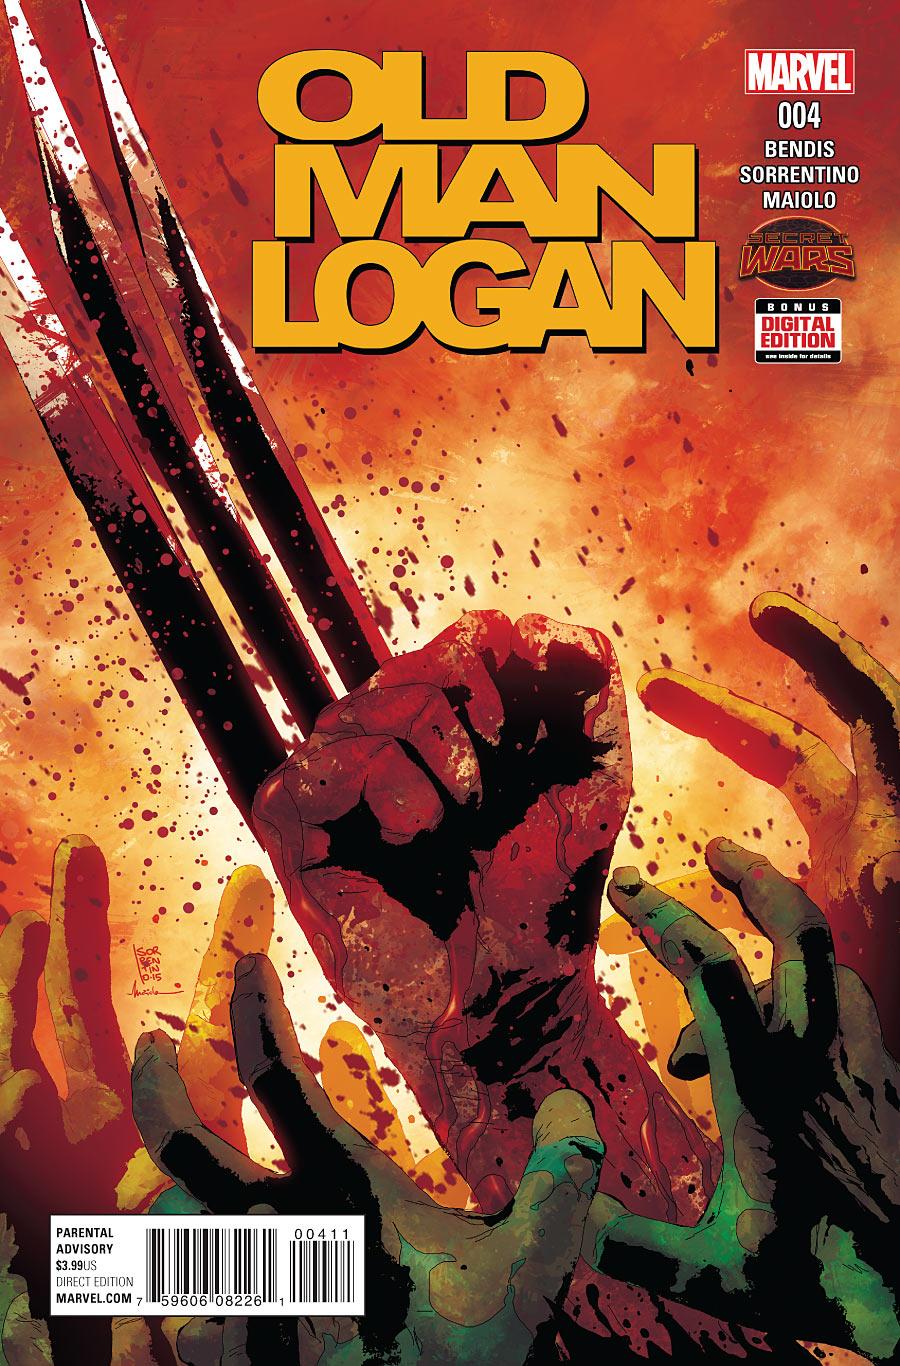 Old Man Logan Vol. 1 #4